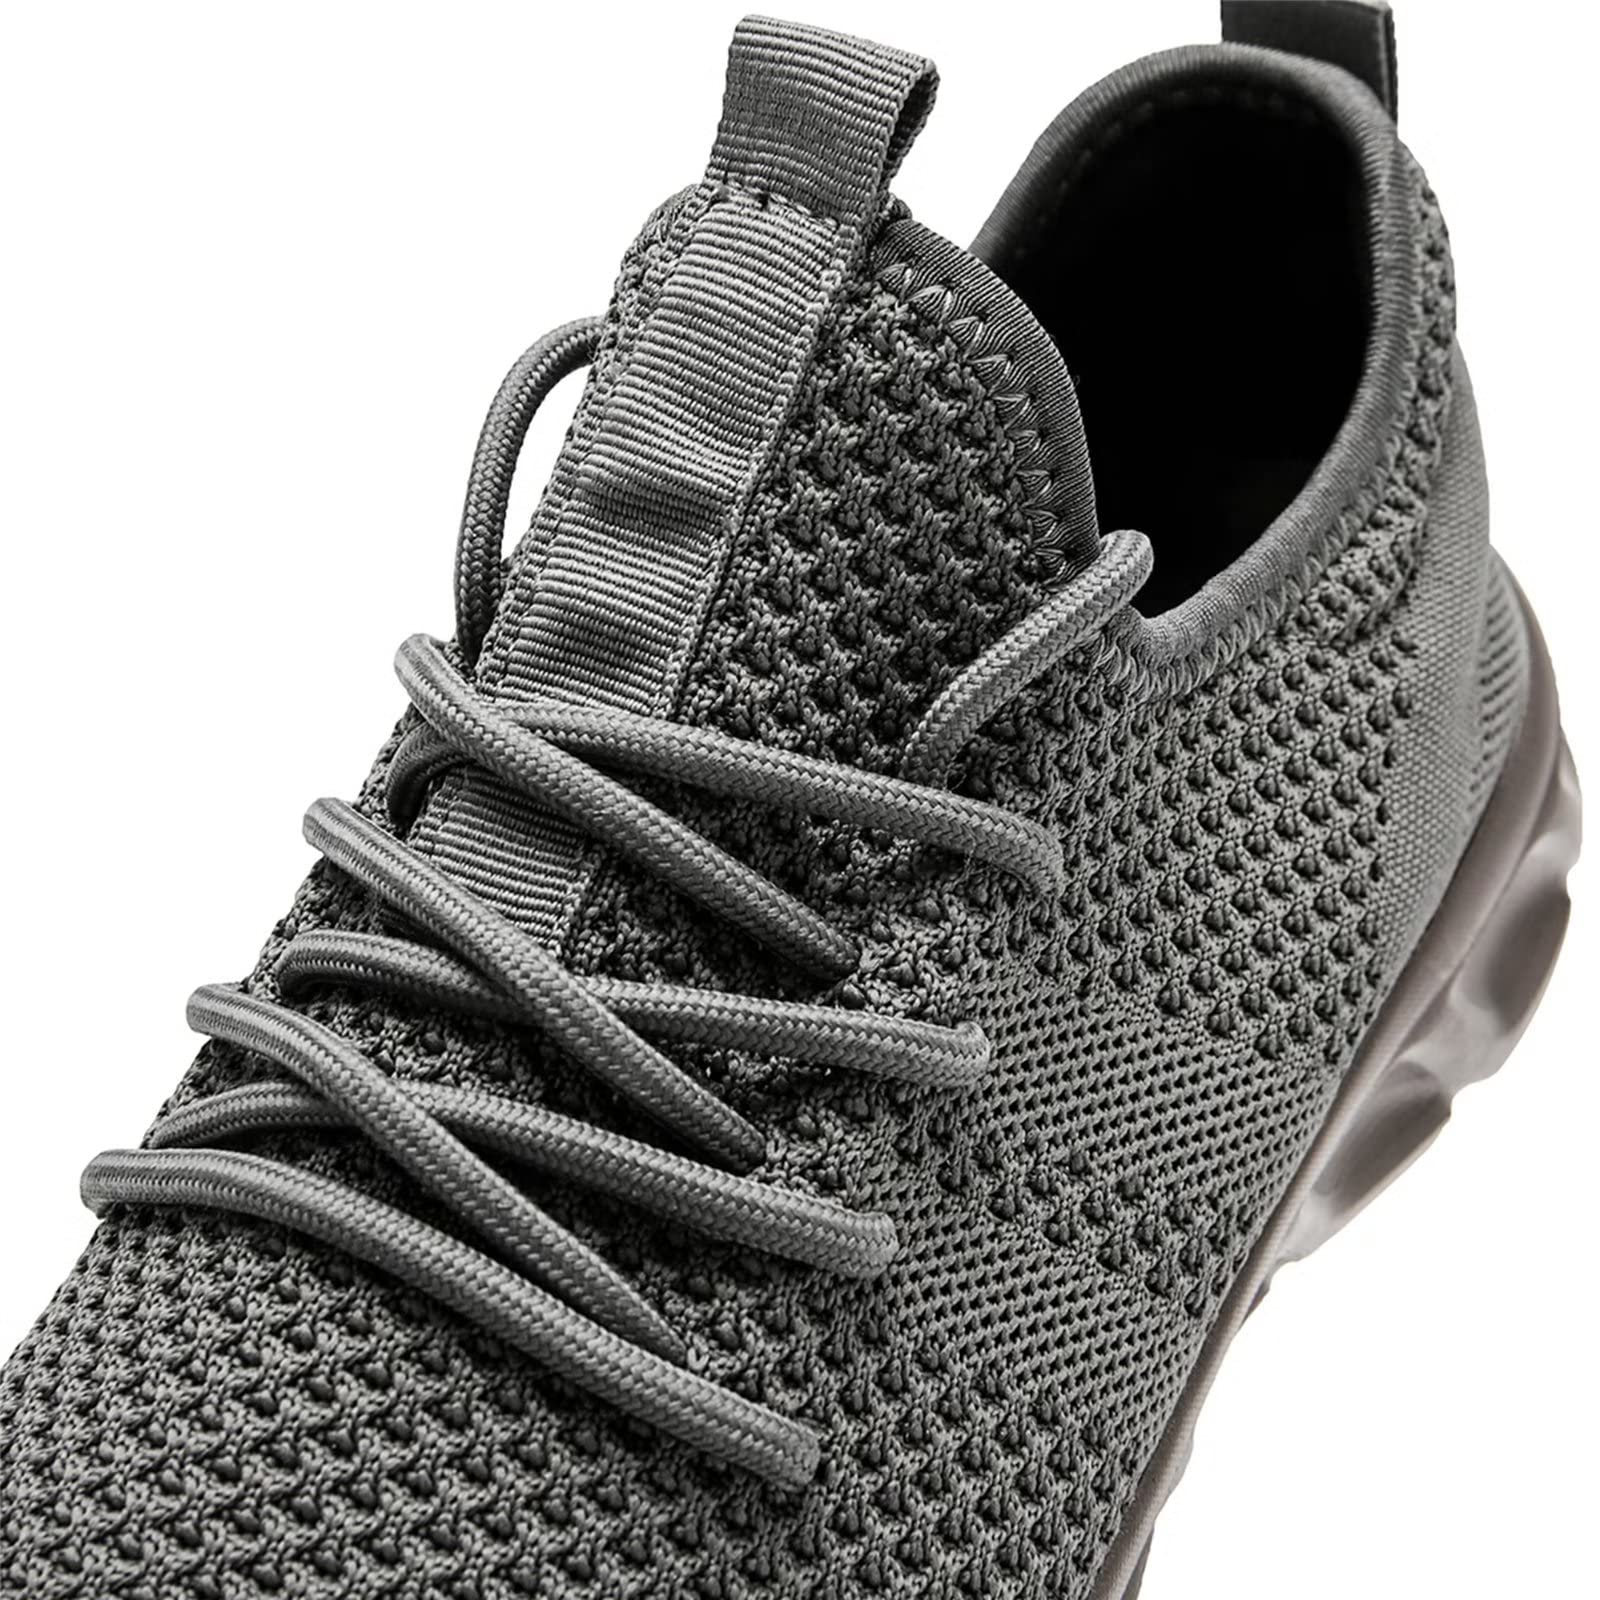 Damyuan Mens Lightweight Athletic Running Walking Gym Shoes Casual Sports Shoes Fashion Sneakers Walking Shoes Dark Grey,9.5